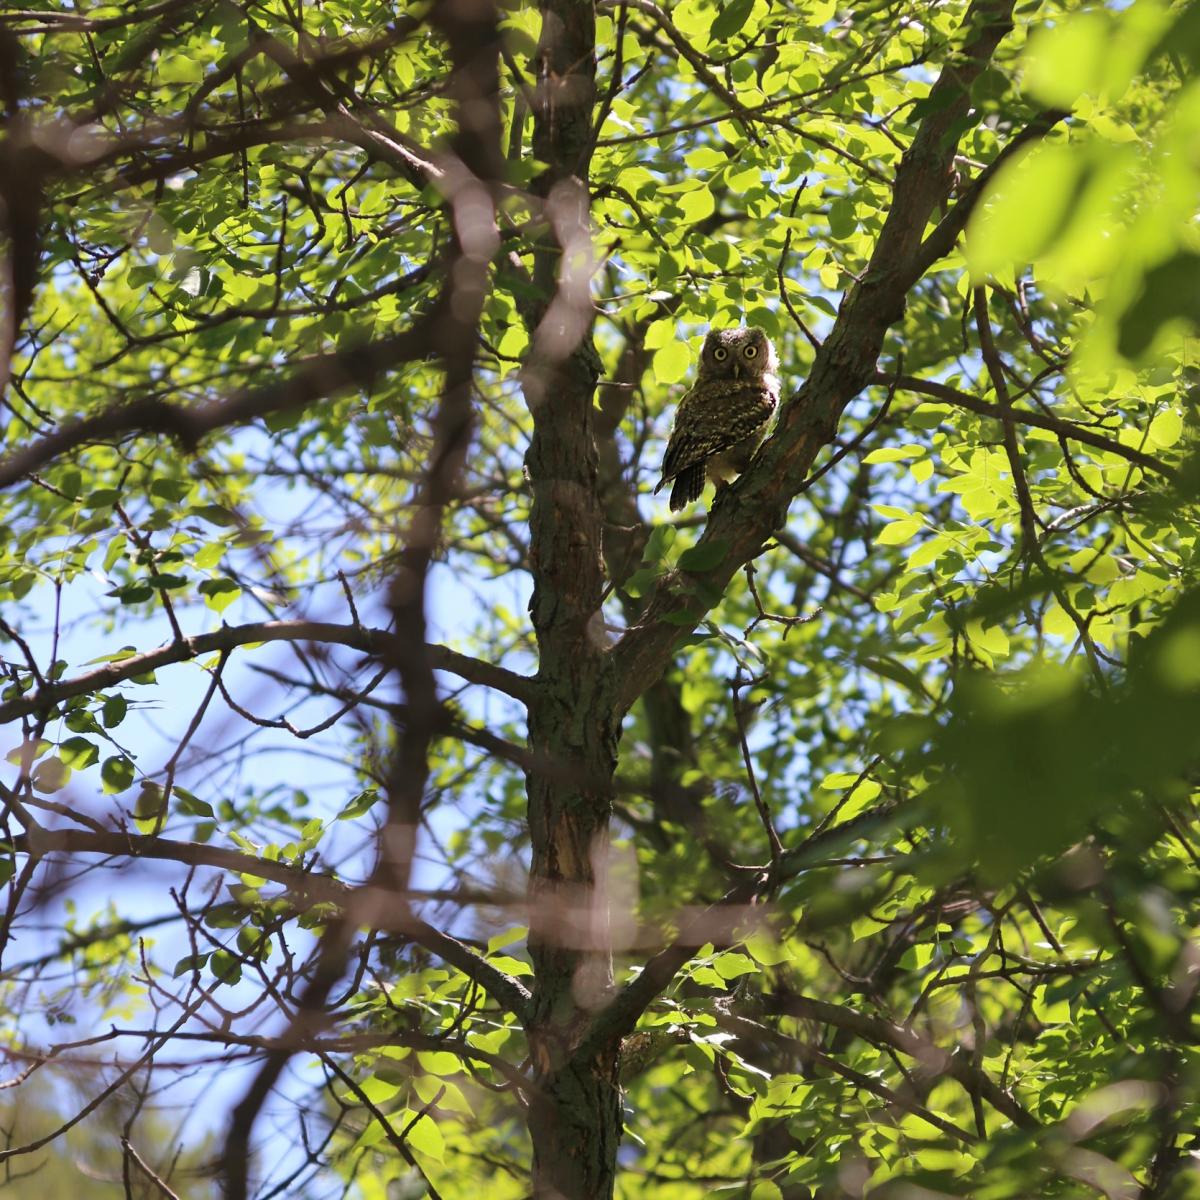 An owl in a tree